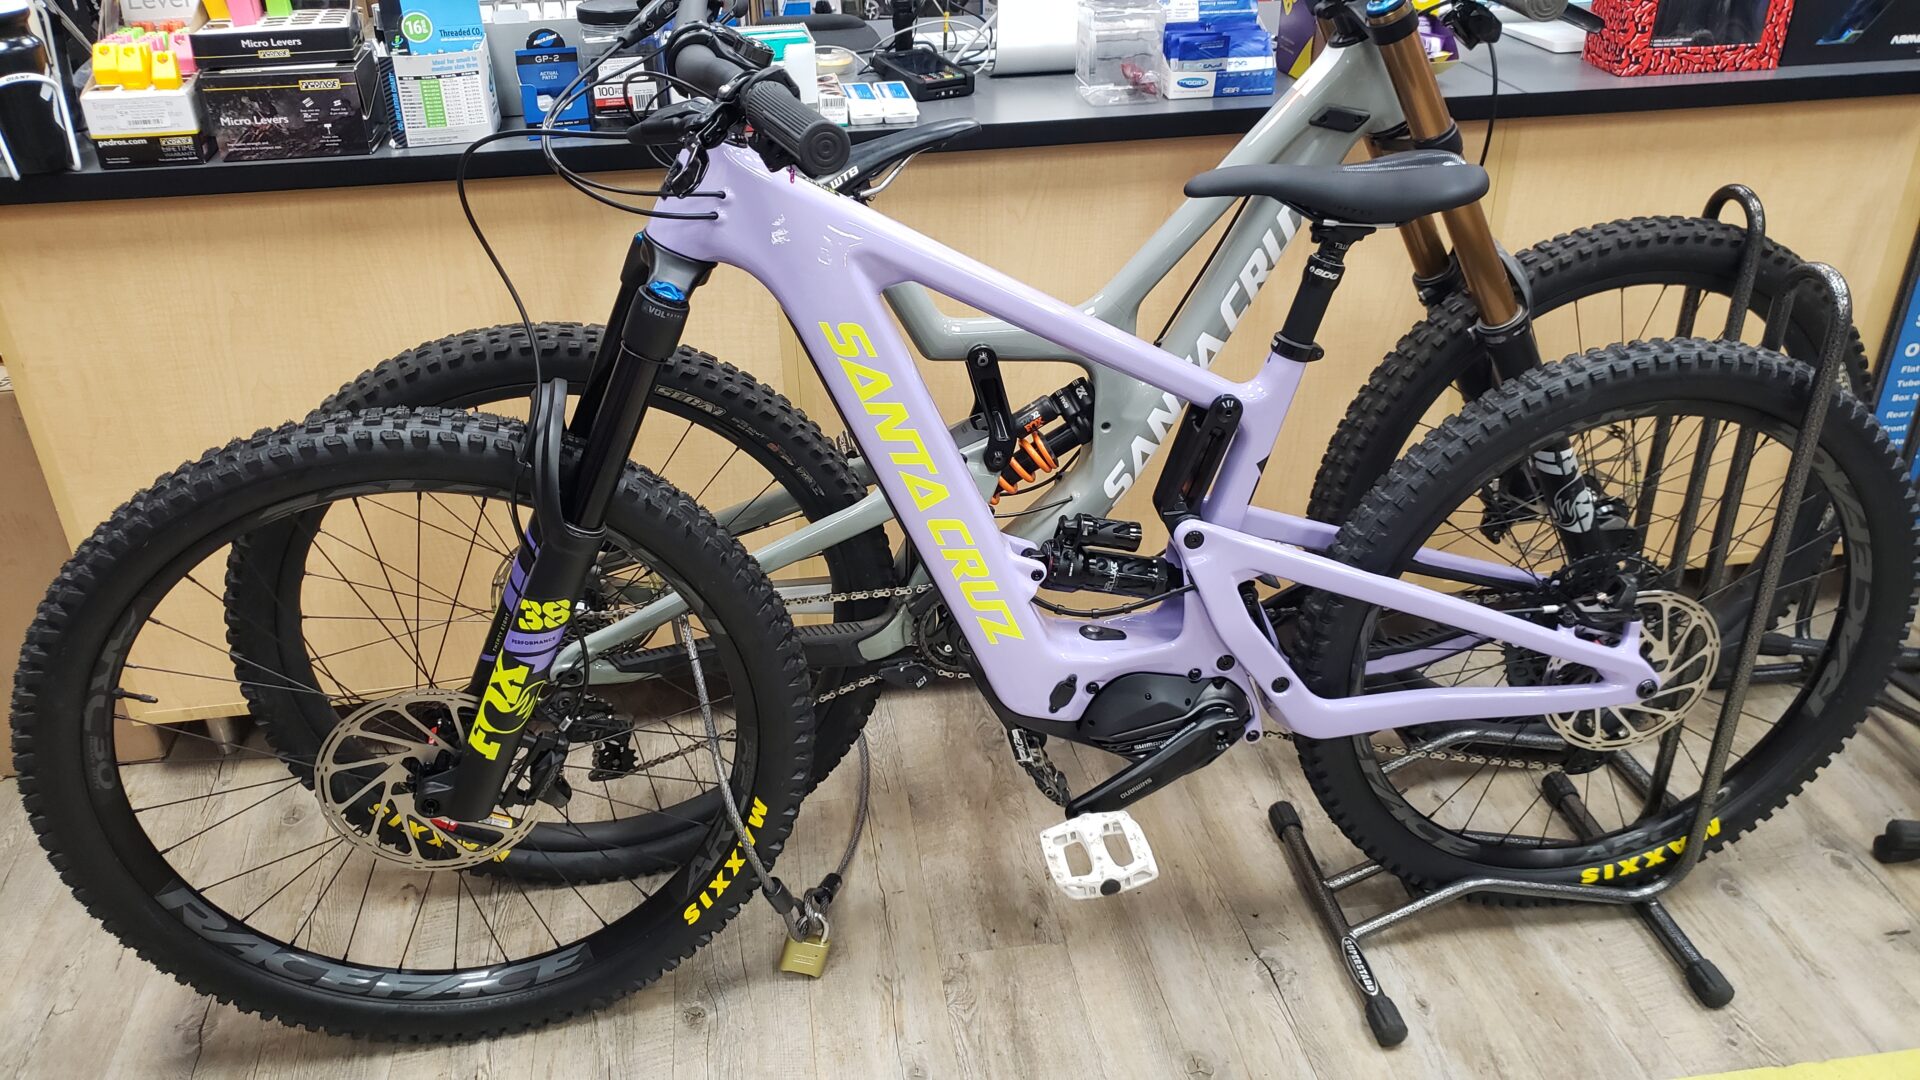 A lavender color bike for a person